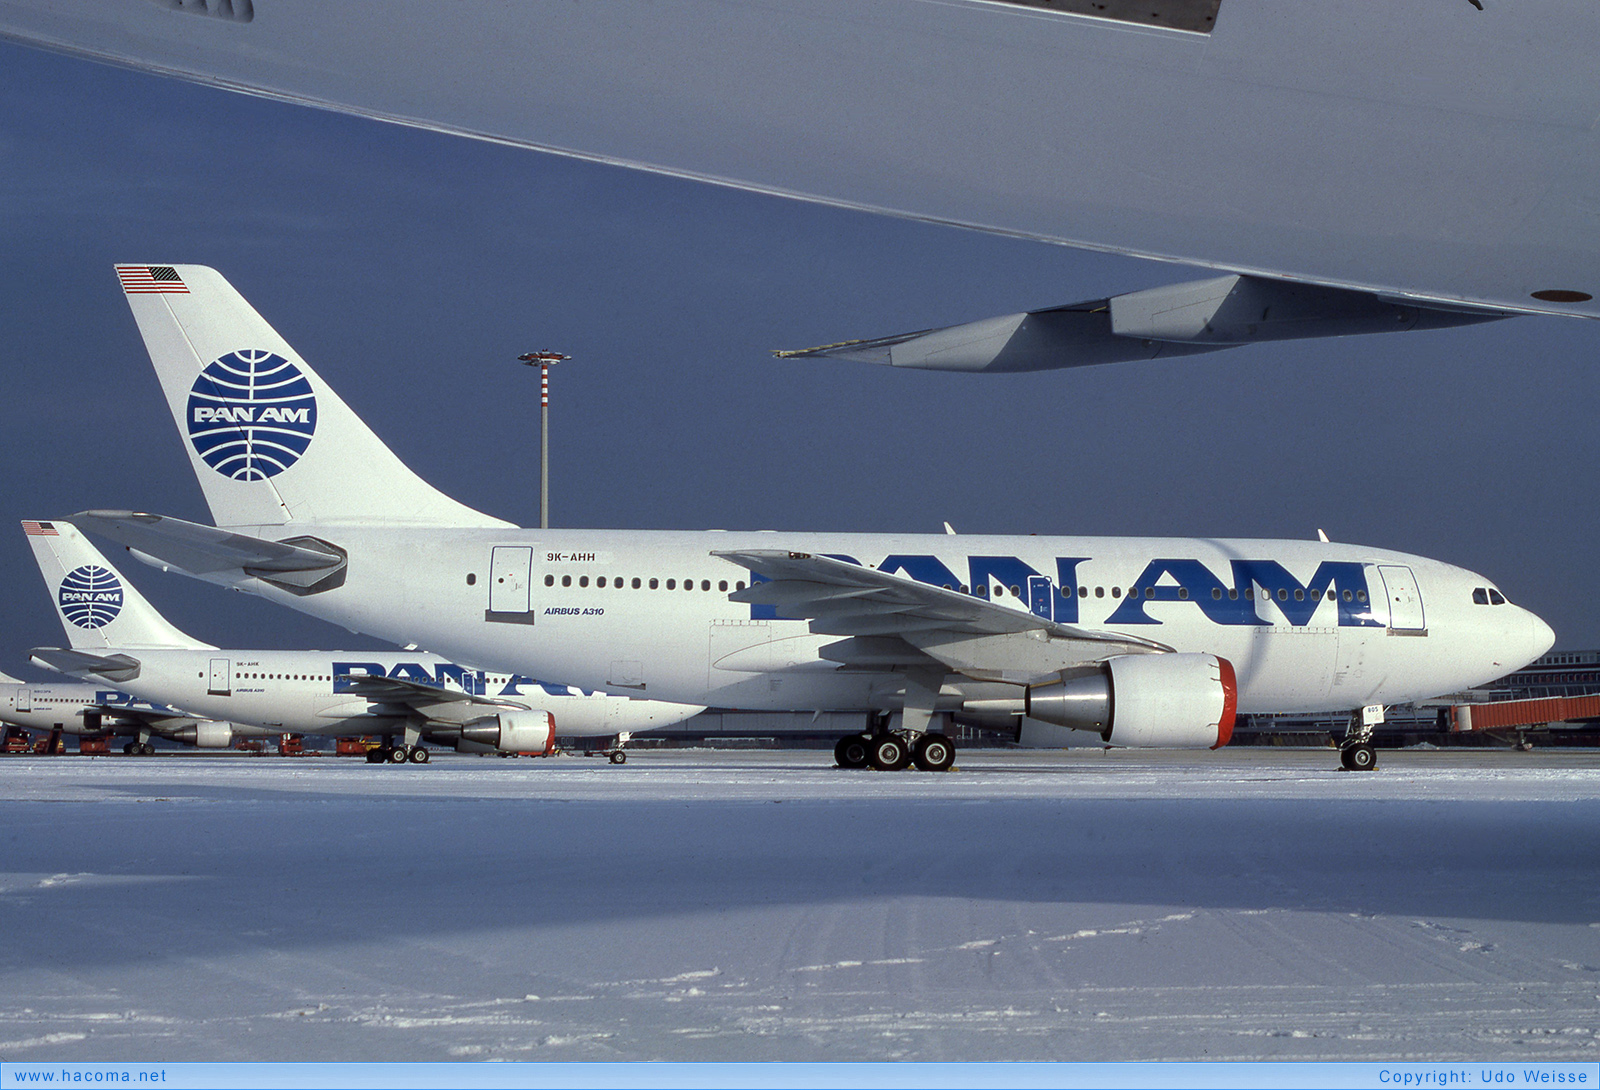 Photo of N805PA - Pan Am Clipper Miles Standish - Hamburg Airport - Jan 1986